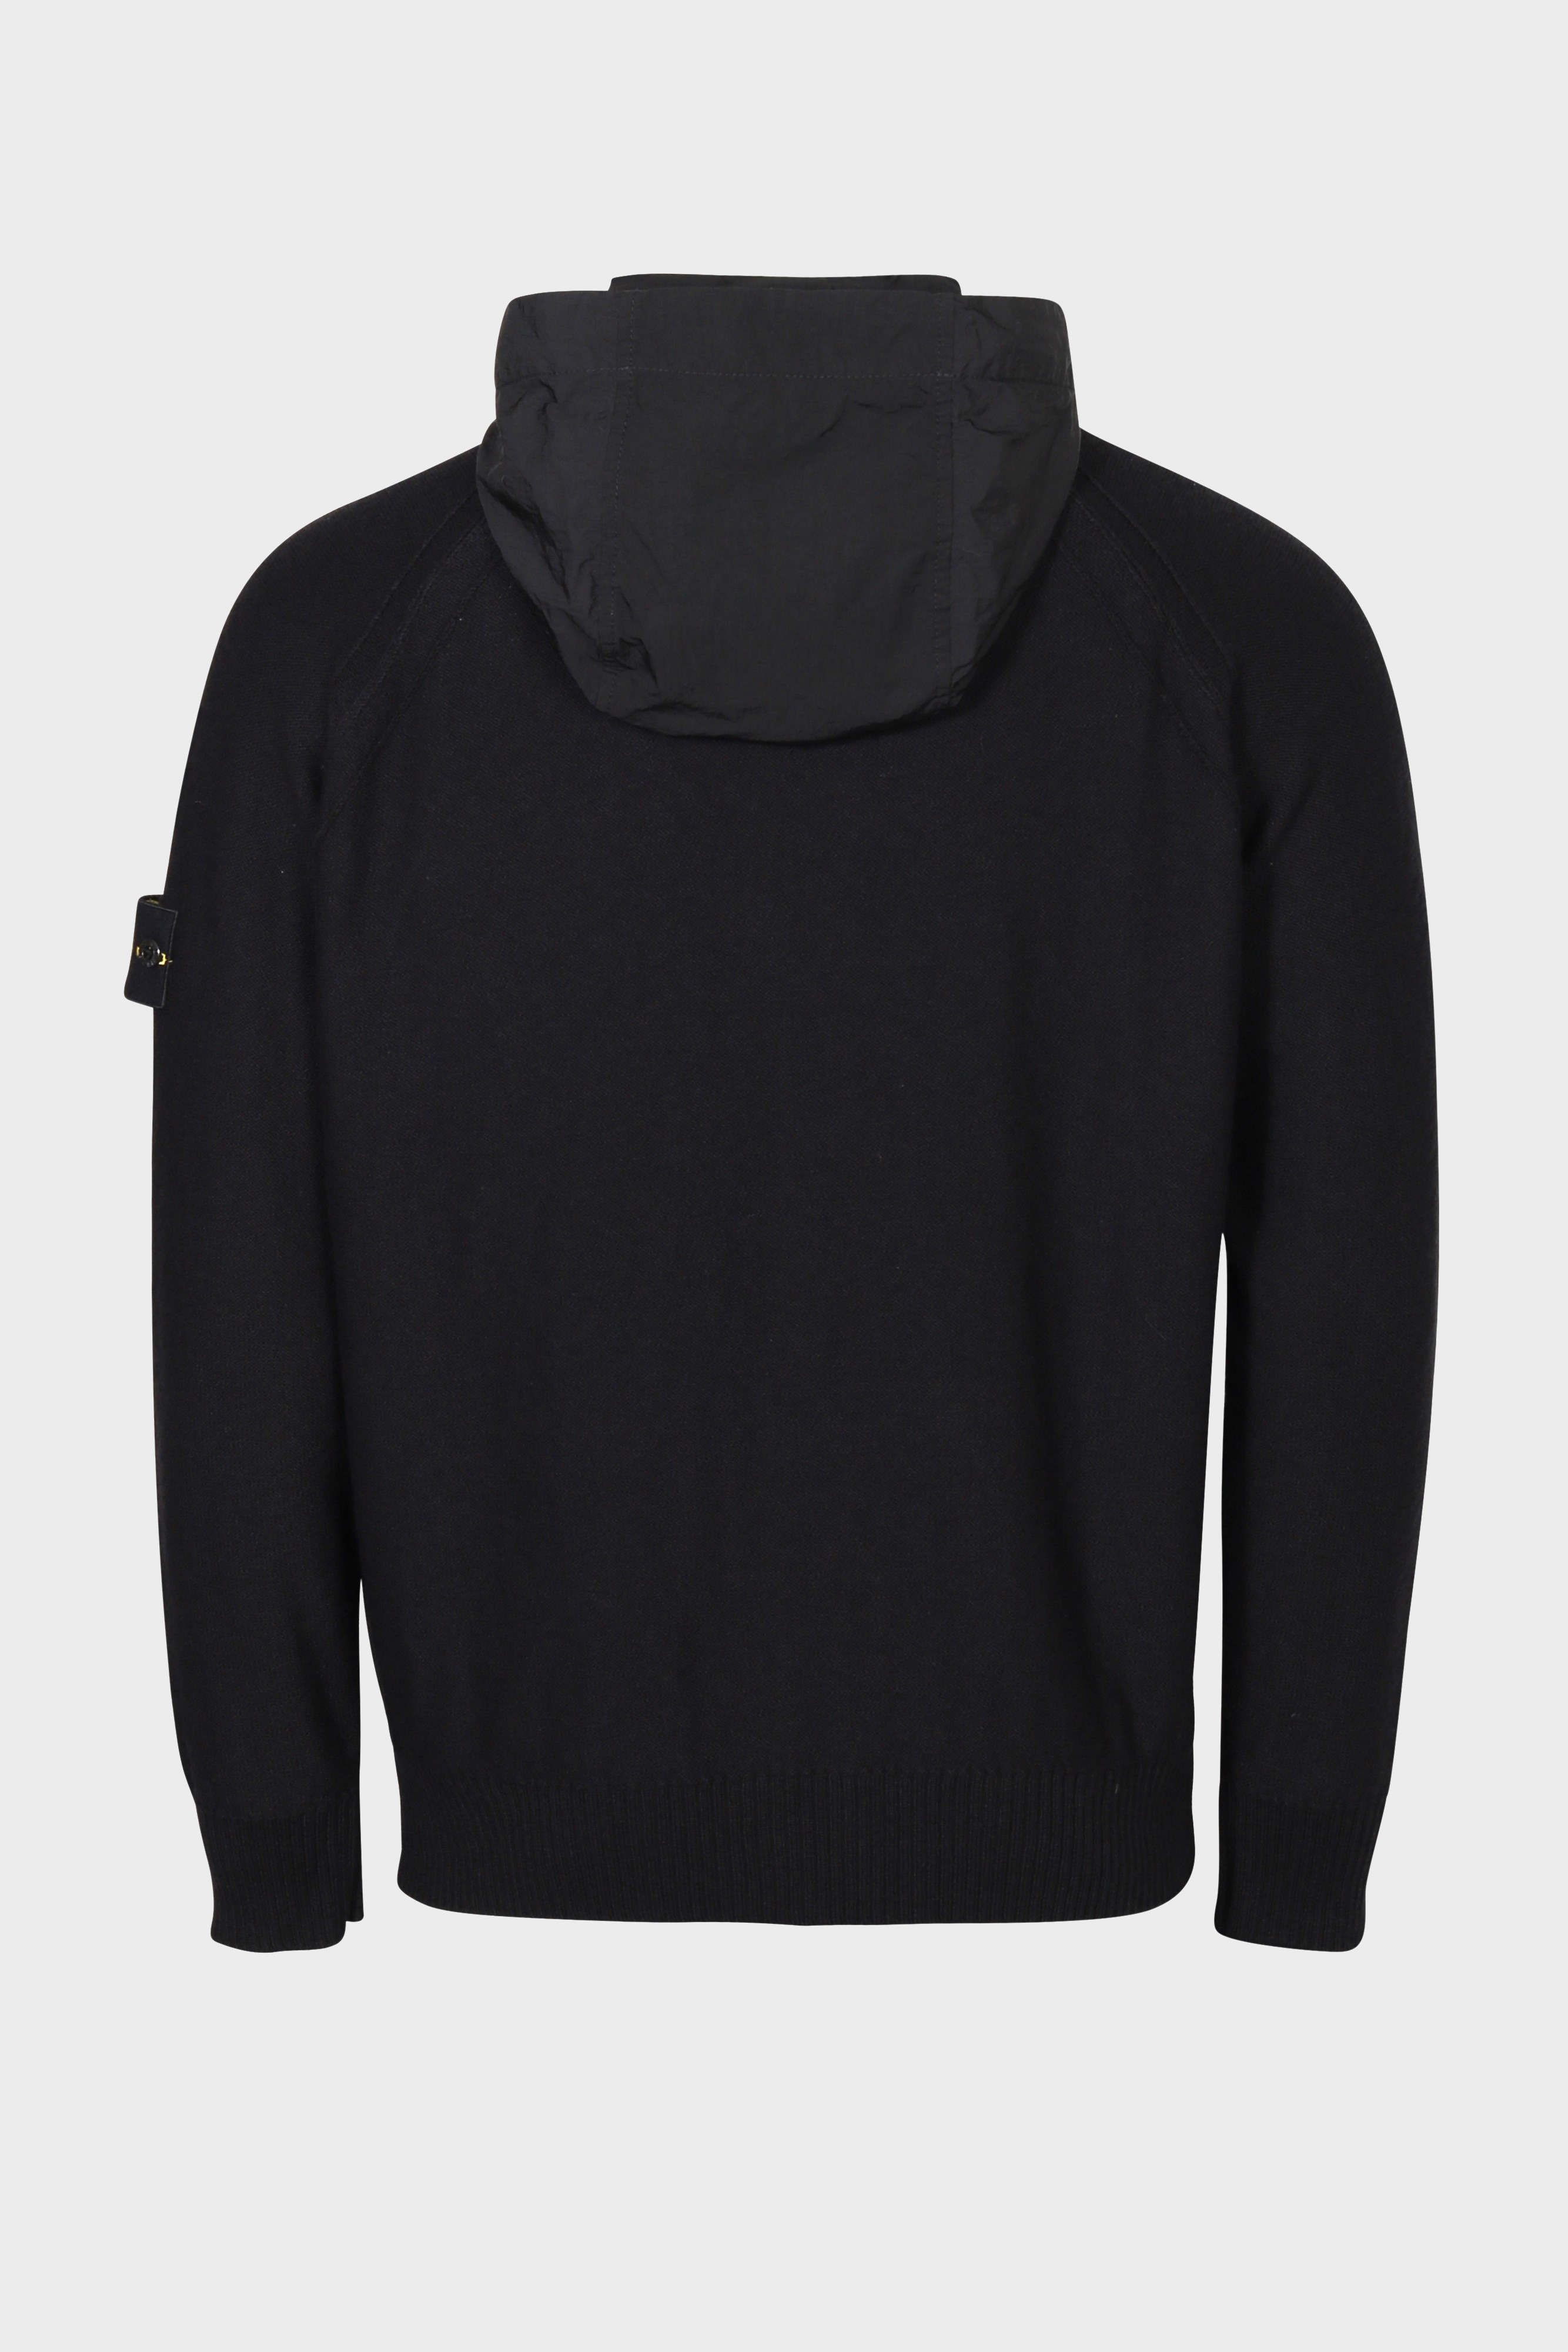 STONE ISLAND Nylon Hooded Knit Jacket in Black 3XL